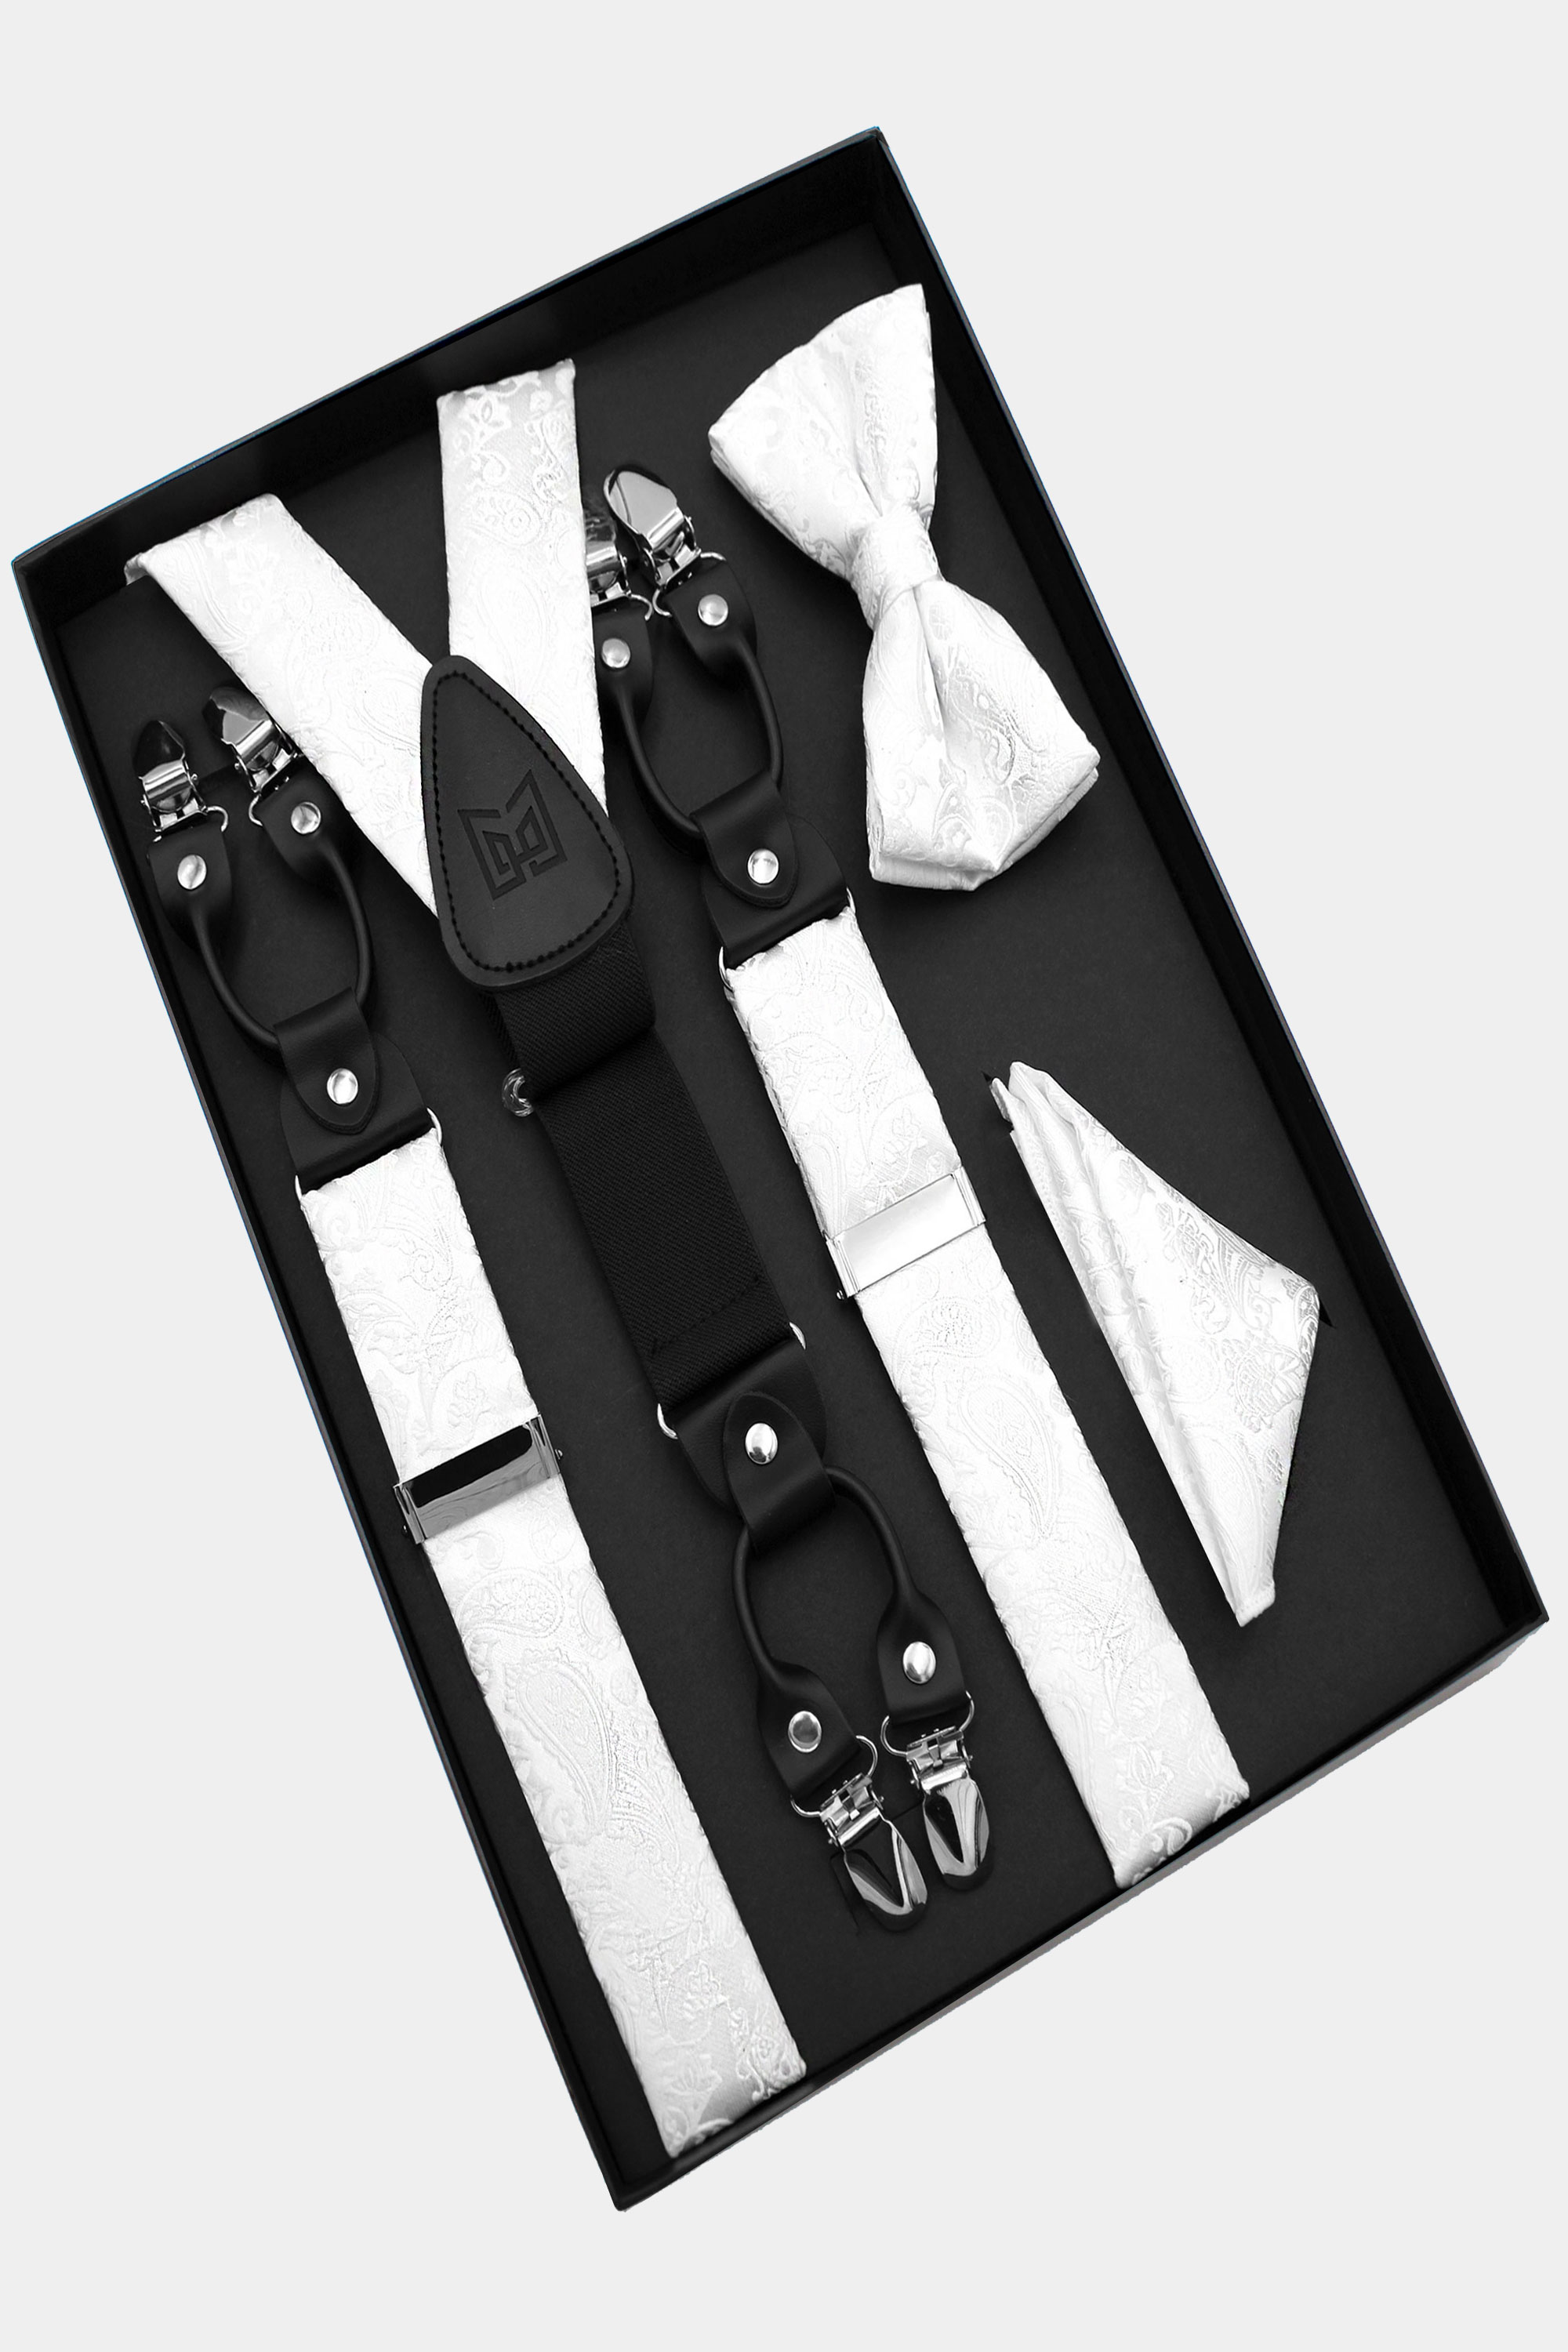 White-Bow-Tie-and-Suspenders-Set-Groomsmen-Wedding-from-Gentlemansguru.com